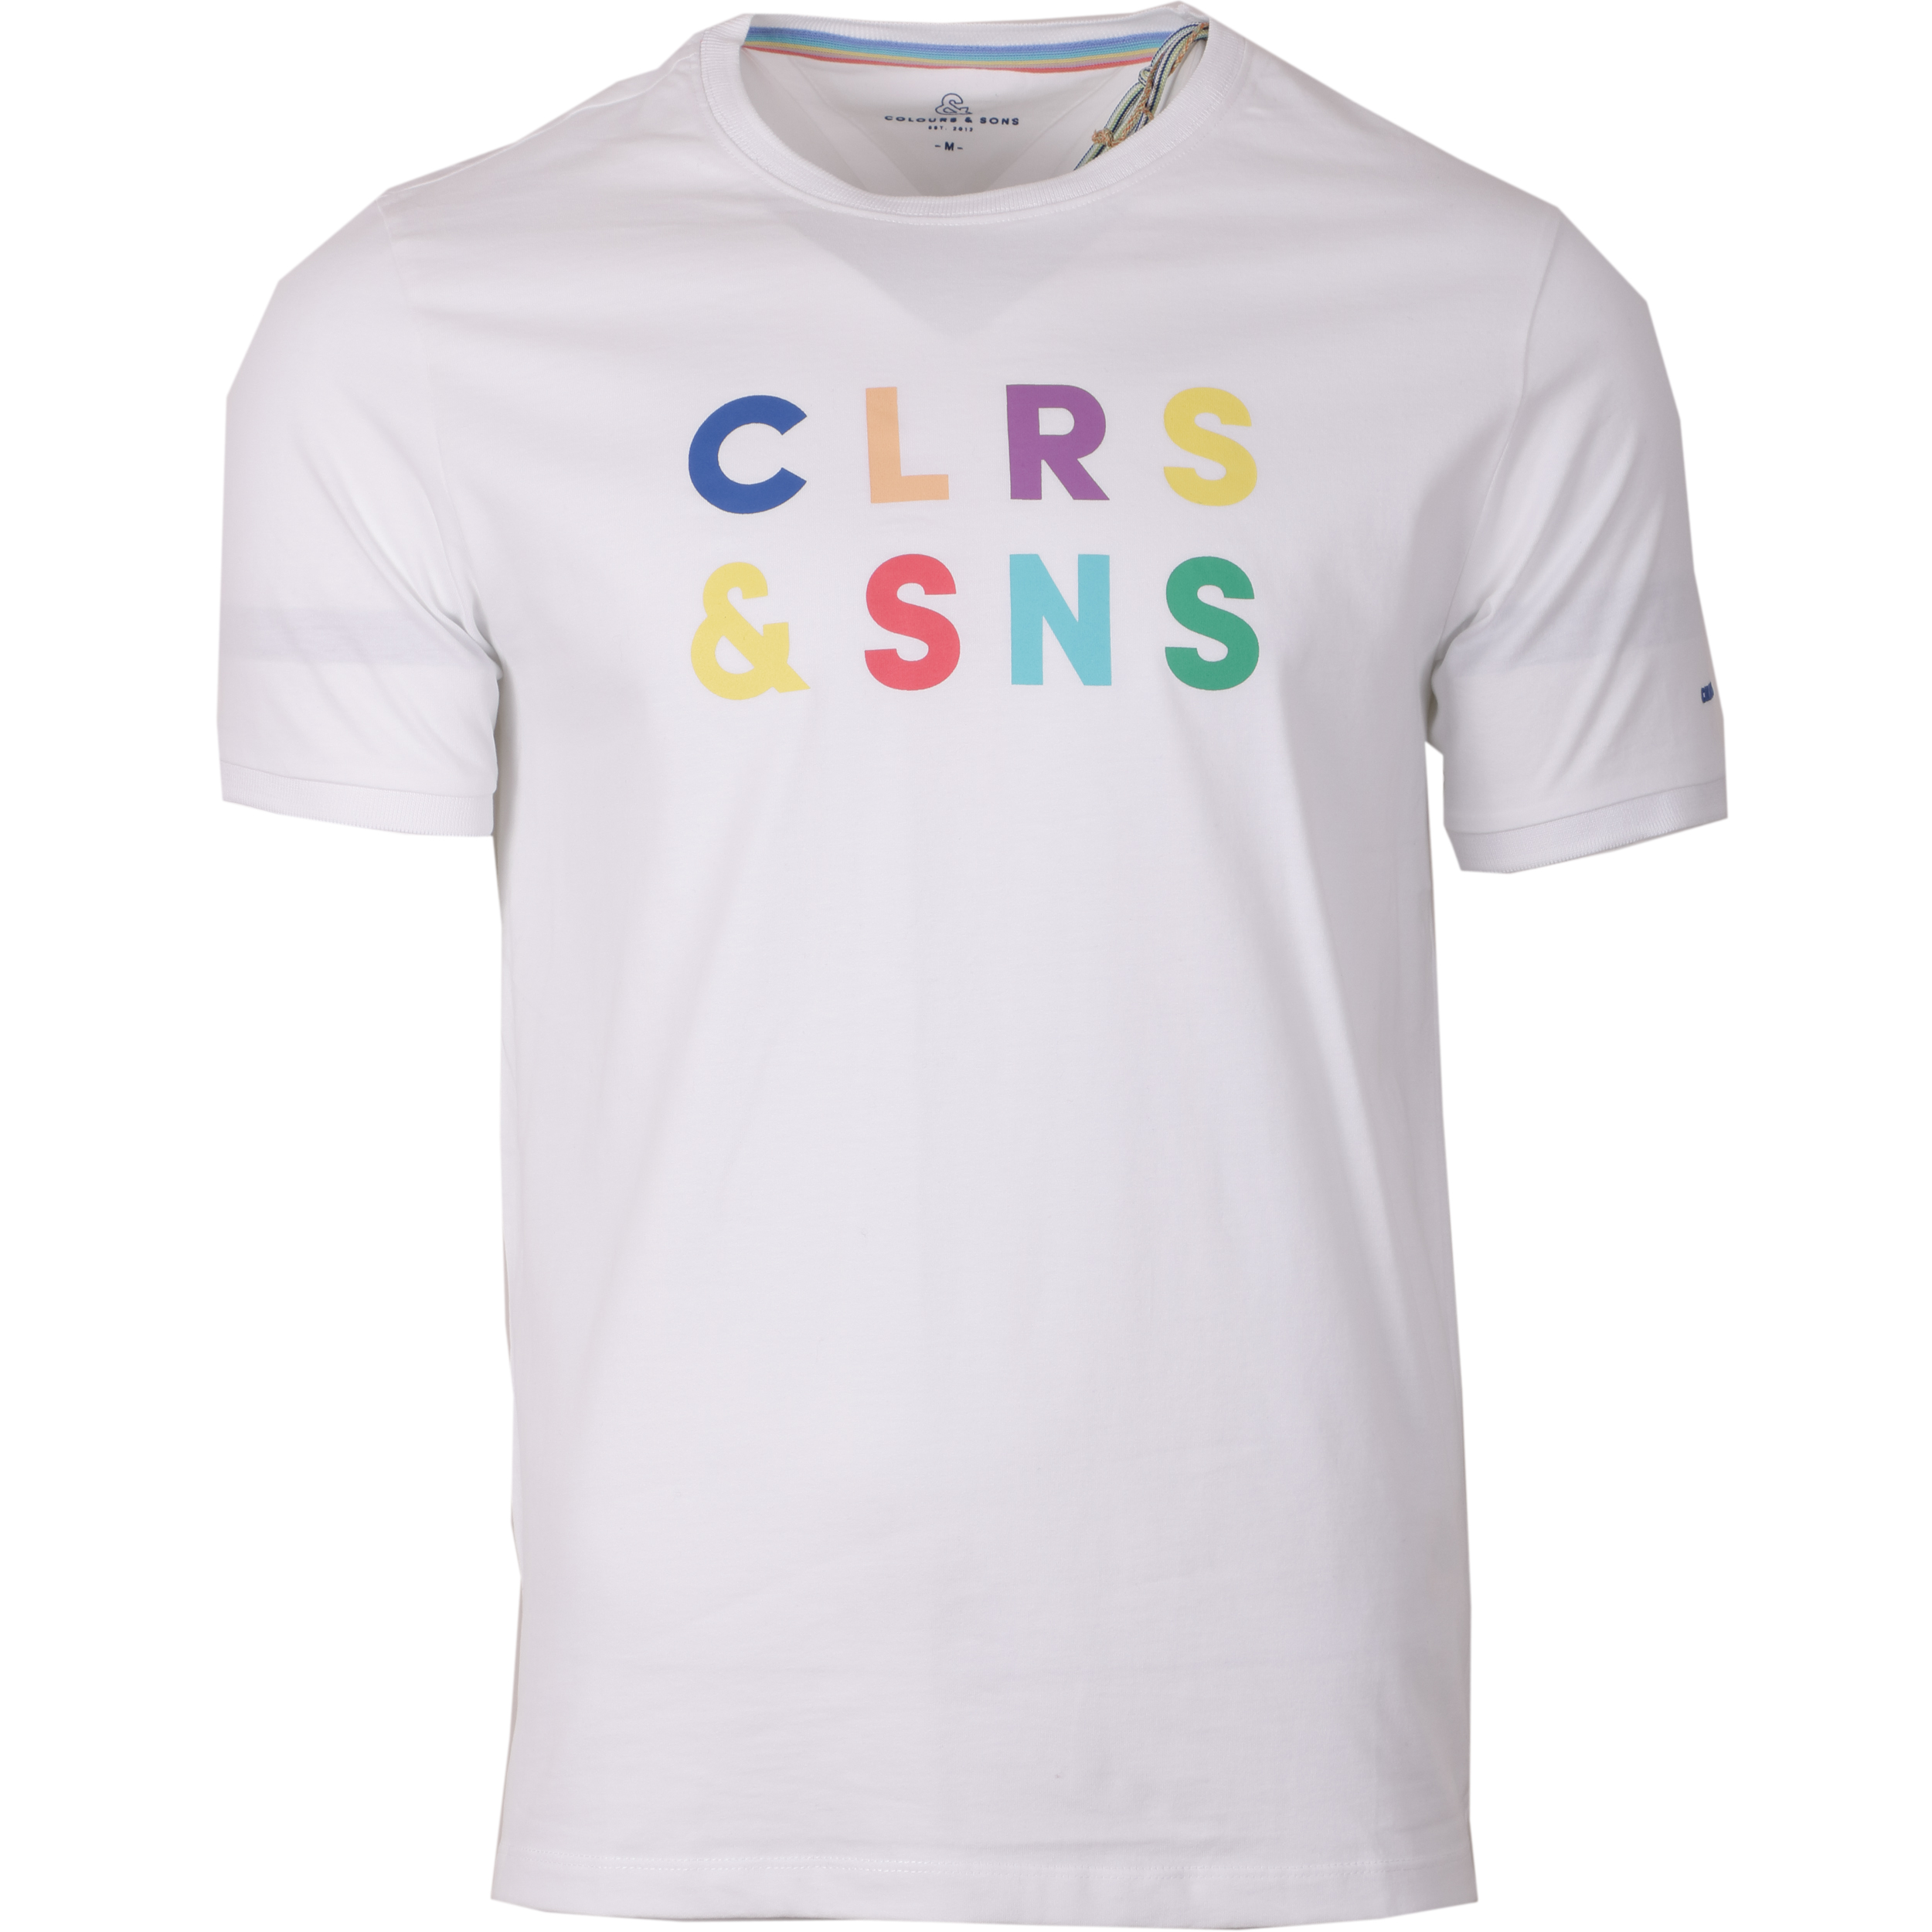 Colours & Sons Herren T-Shirt front Print XXL weiß